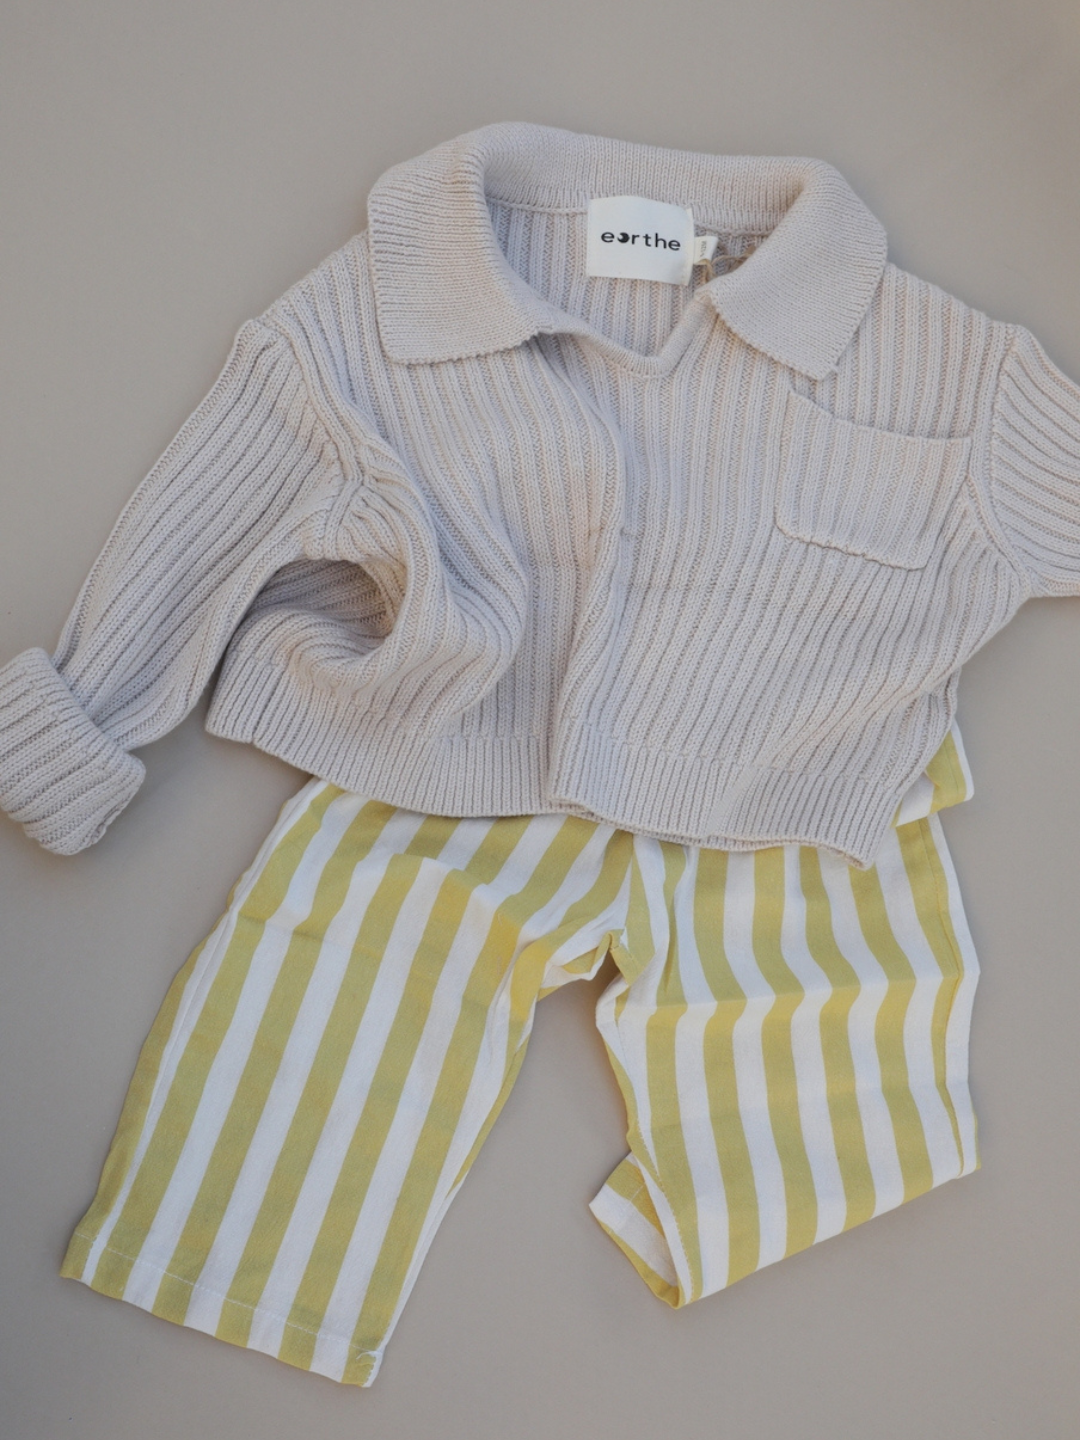 Yellow | Yellow stripe pants & sweater flatlay outfit